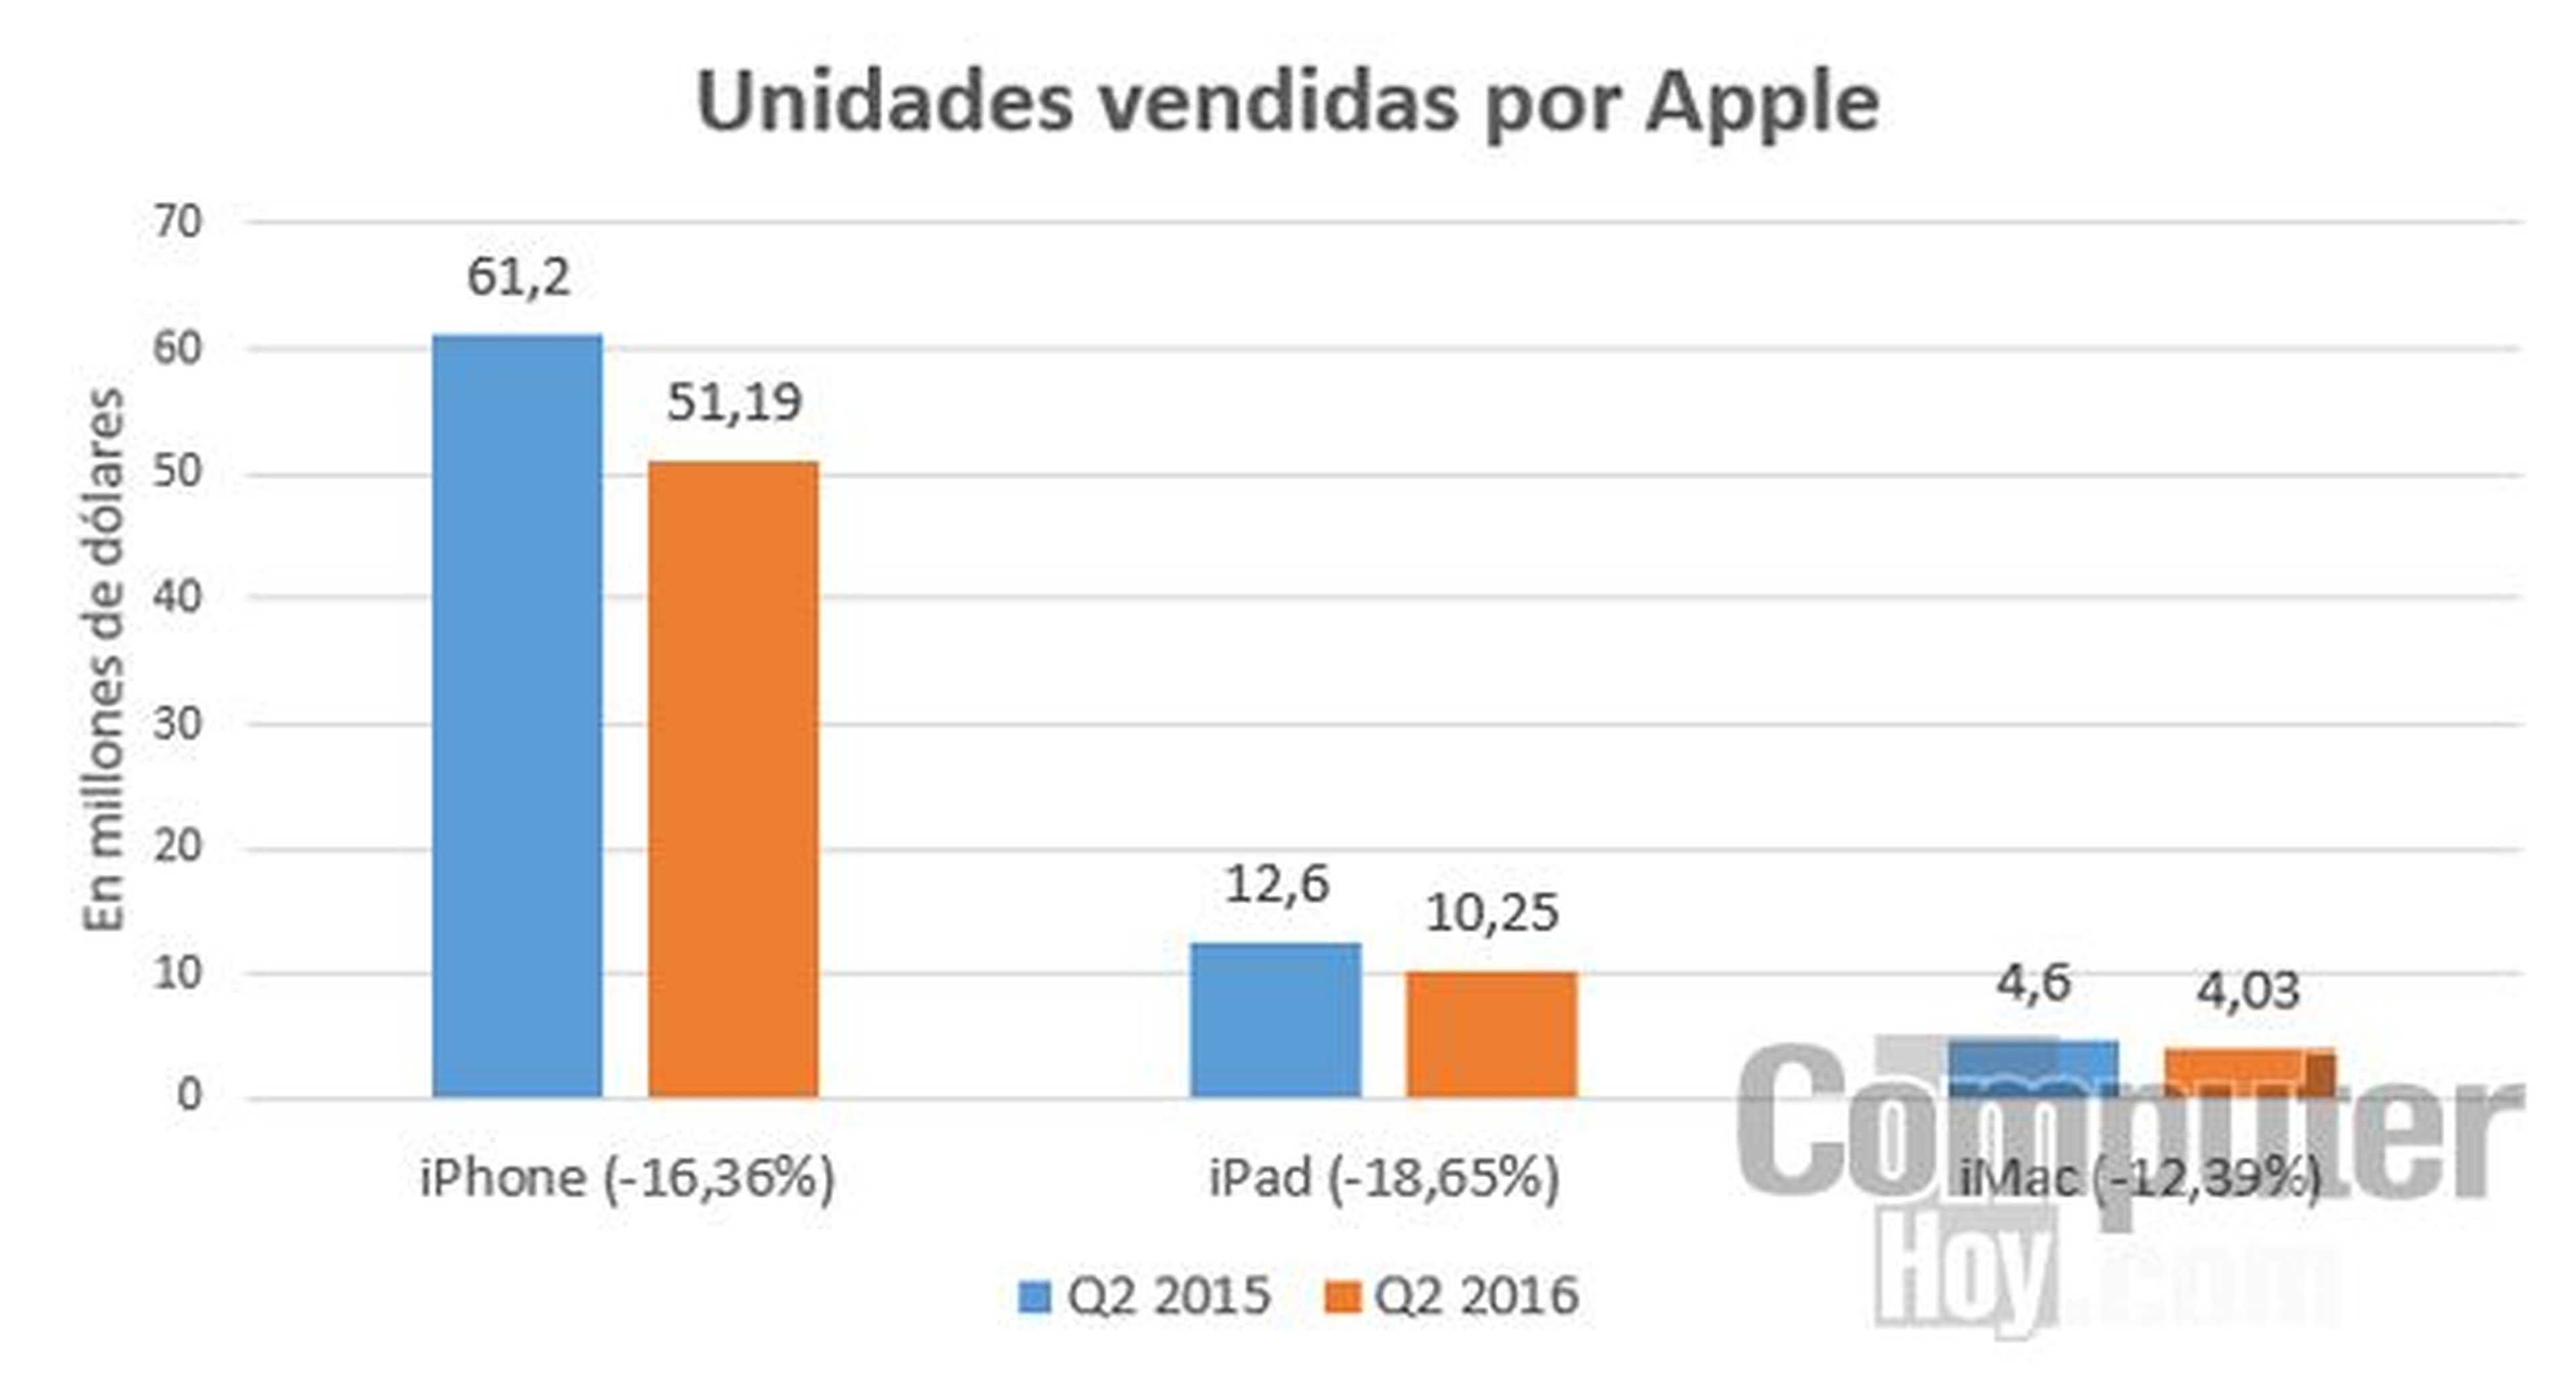 Unidades vendidas por Apple Q2 2015 vs Q2 2016